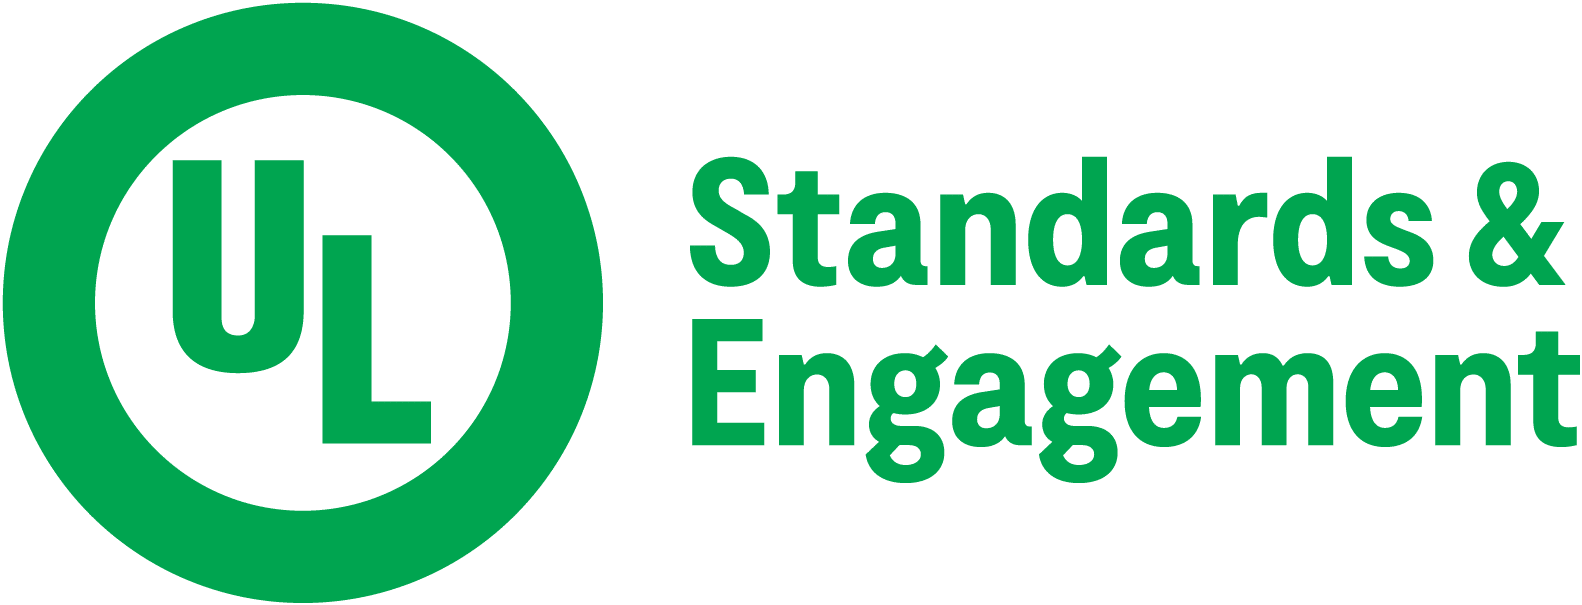 UL Standards & Engagement